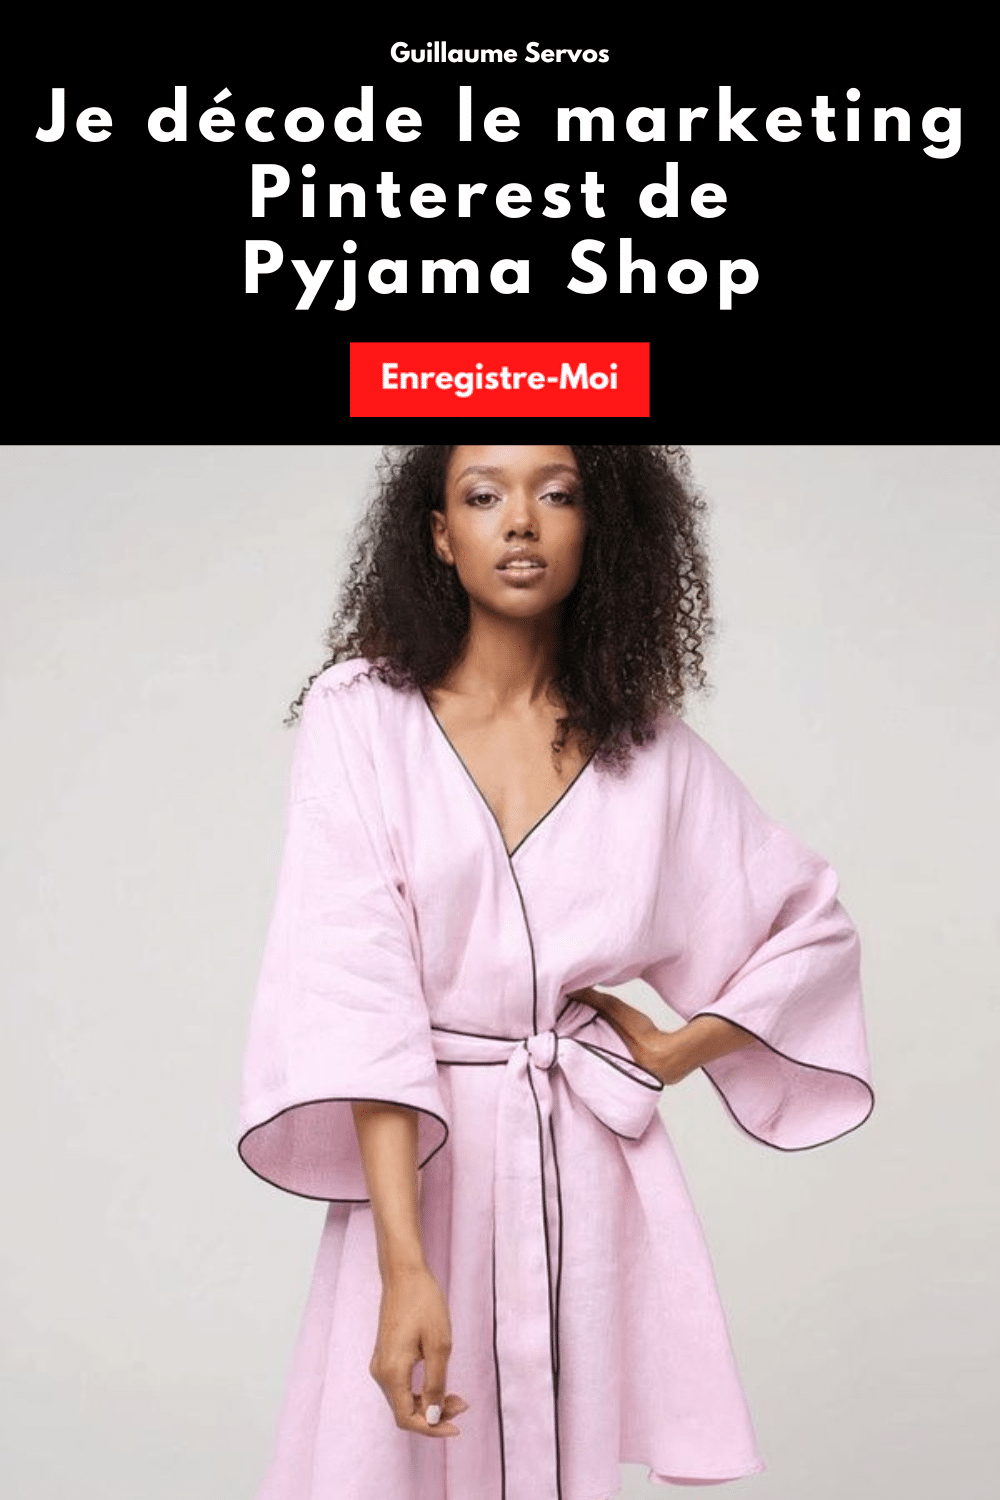 Combinaison pyjama : c'est quoi cette mode du Kigurumi ? – La Totale